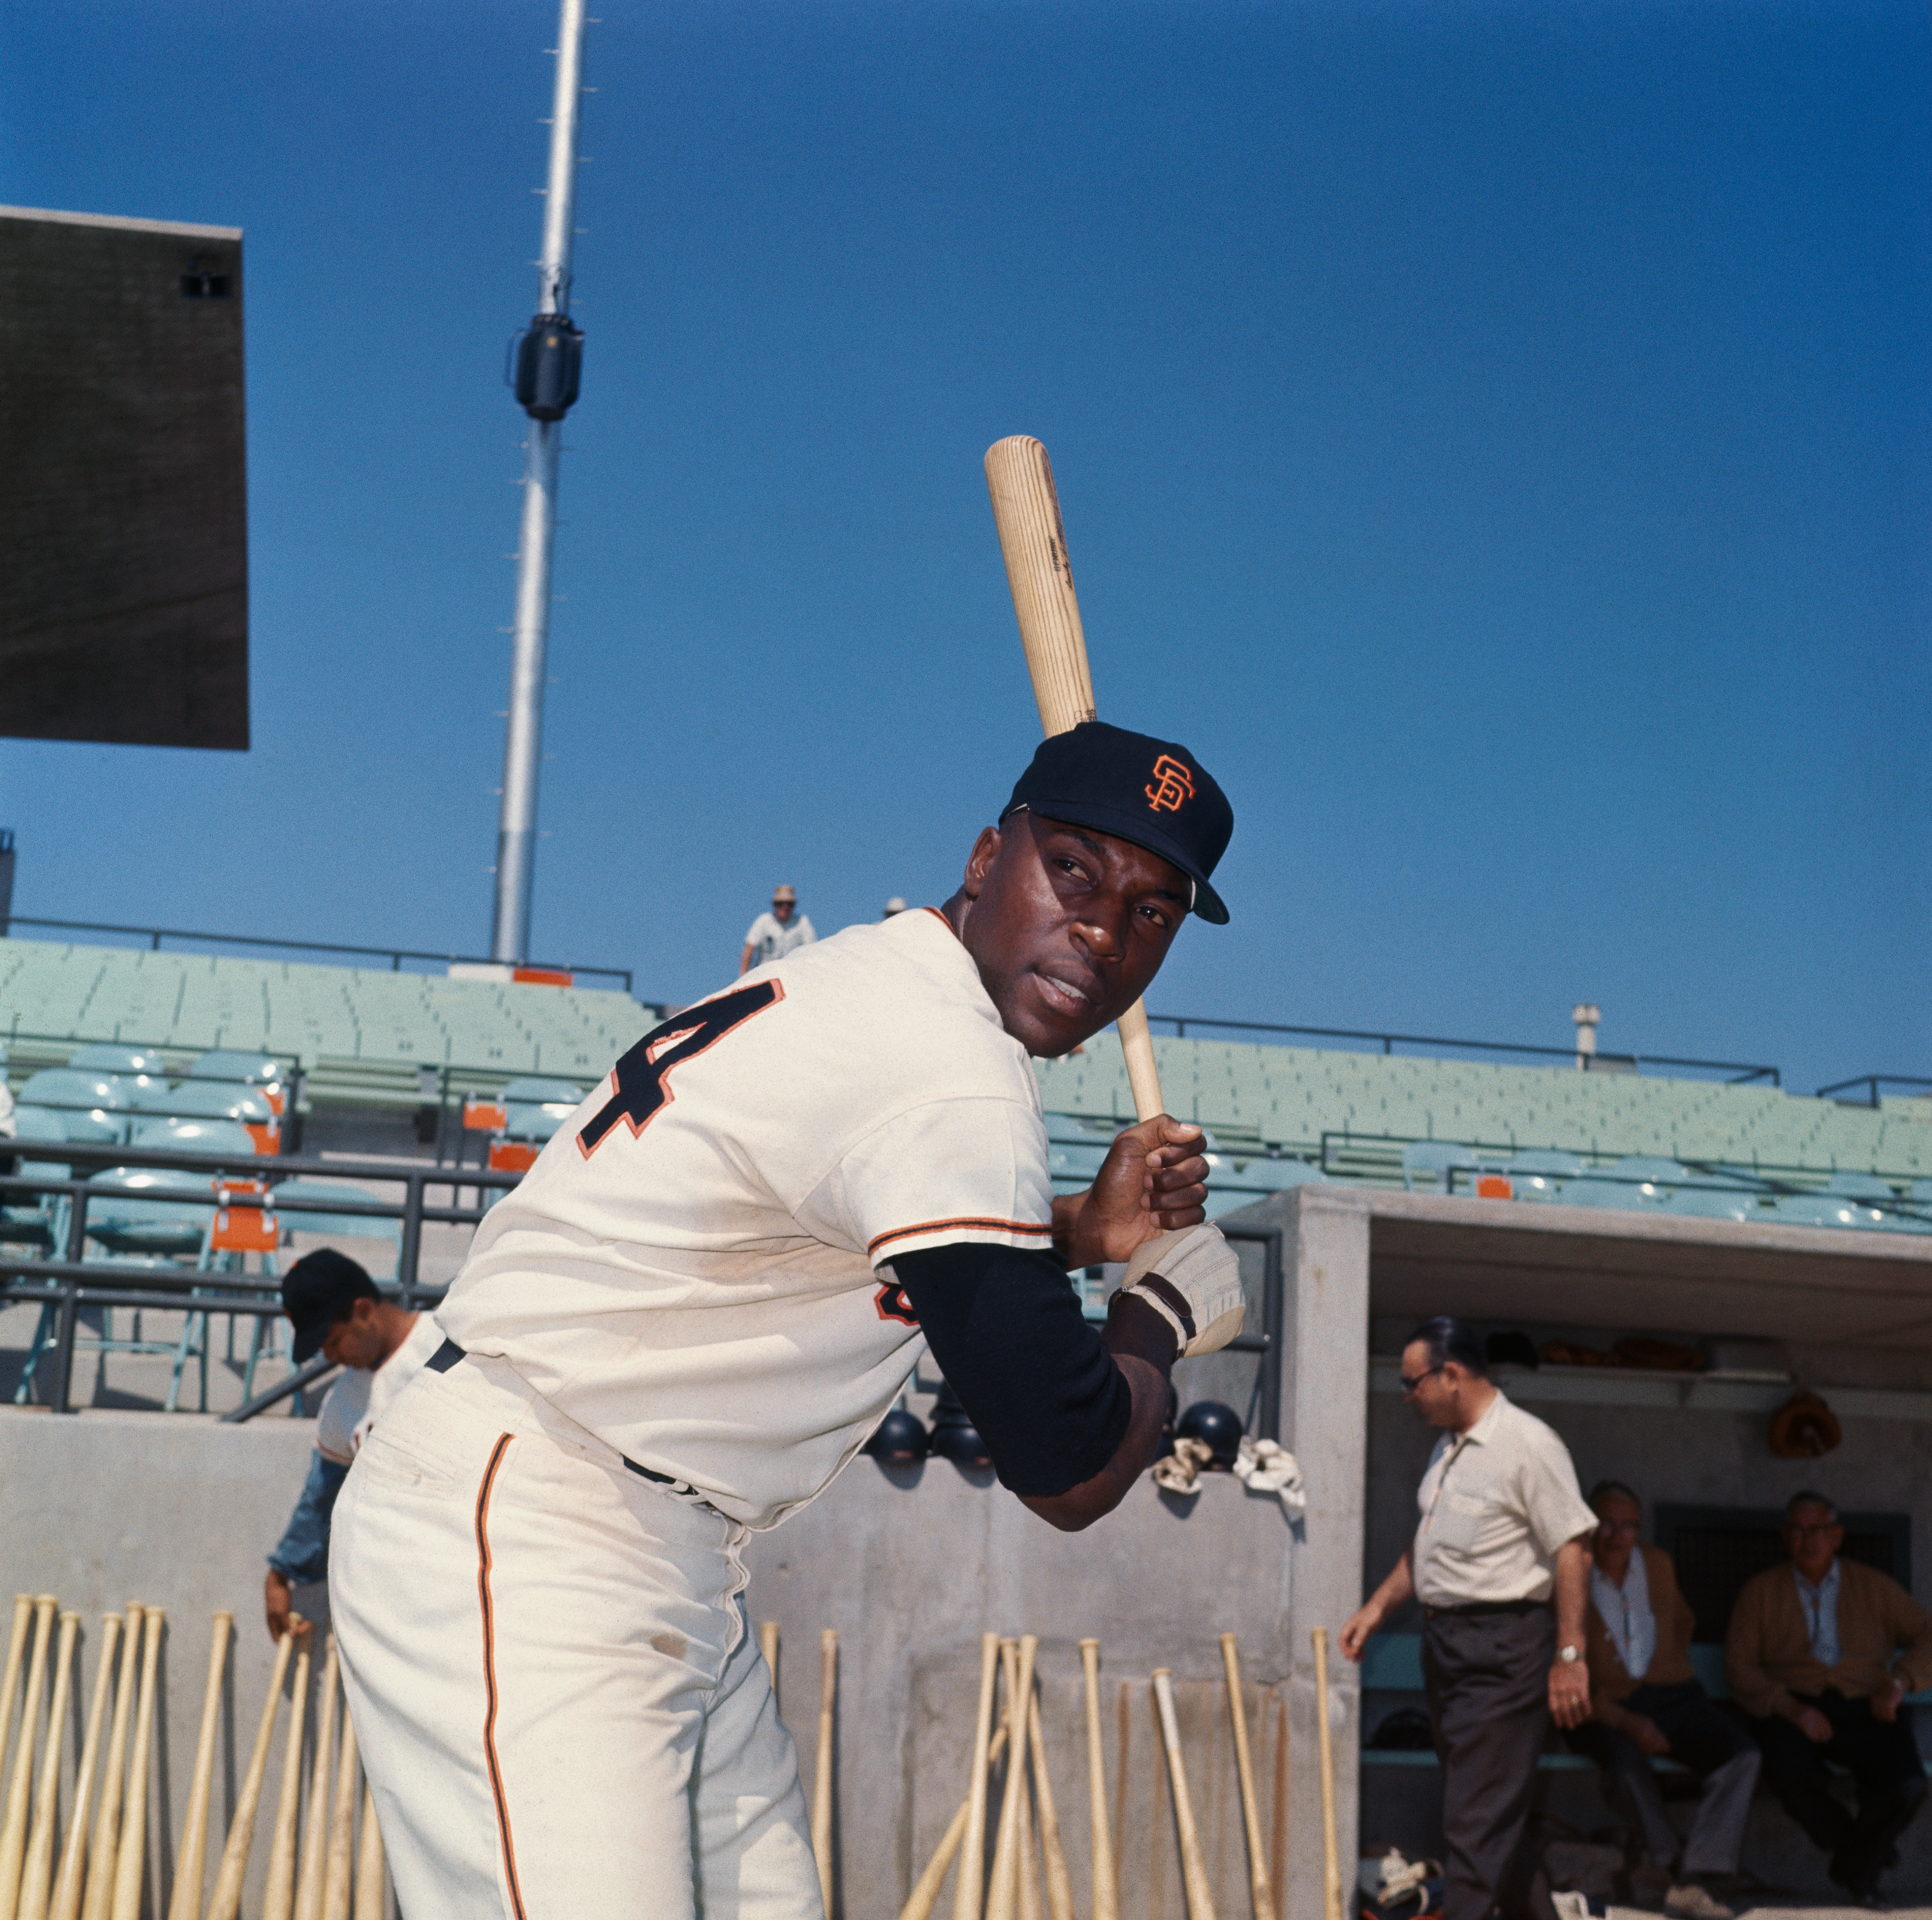 Willie McCovey Holding a Baseball Bat